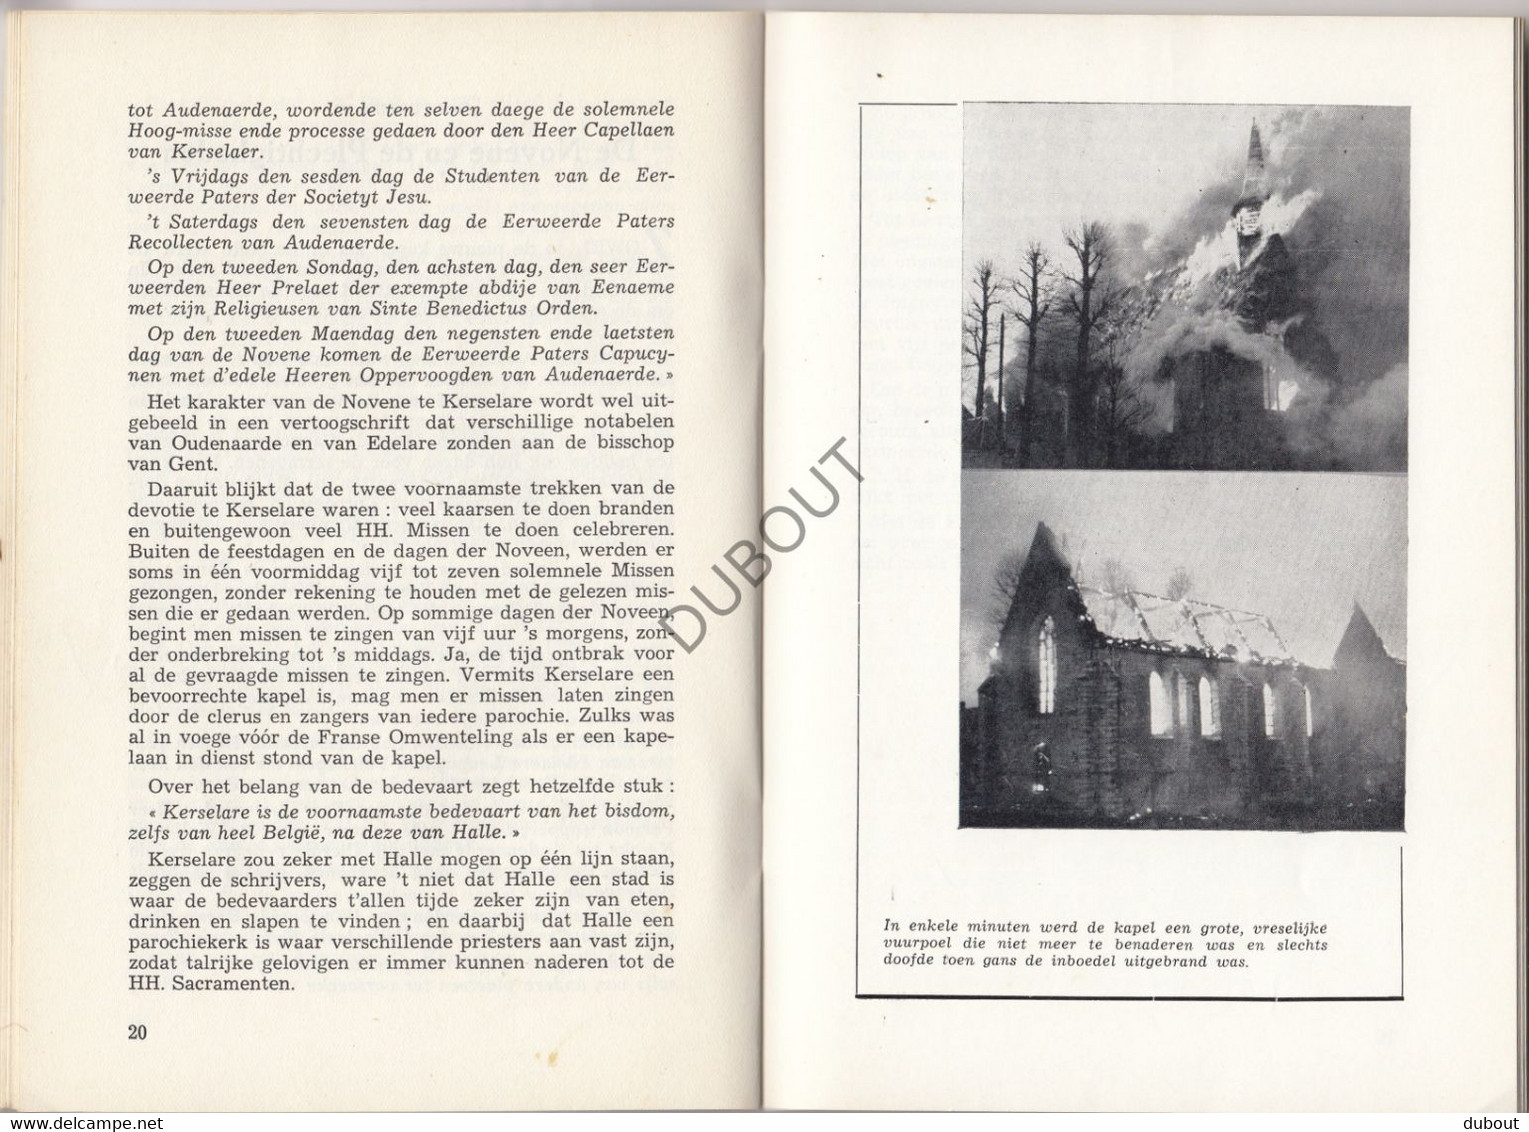 KERSELARE/Edelare/Oudenaarde Geschiedenis OLVrouw - E.H. Soens ±1965 (N786)